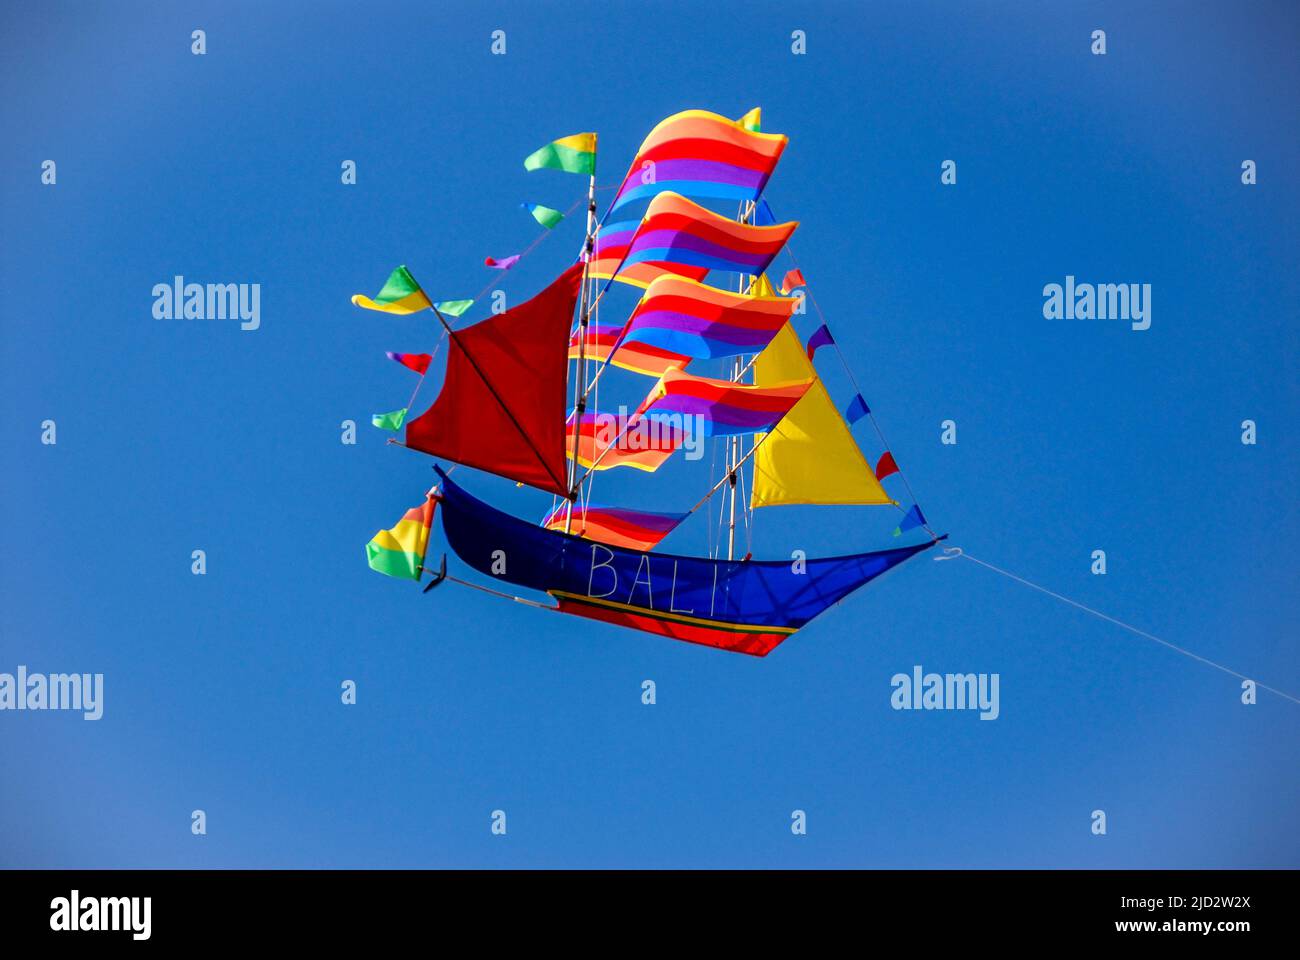 A kite promoting the 'Island of the Gods' on Nusa Dua beach. Stock Photo